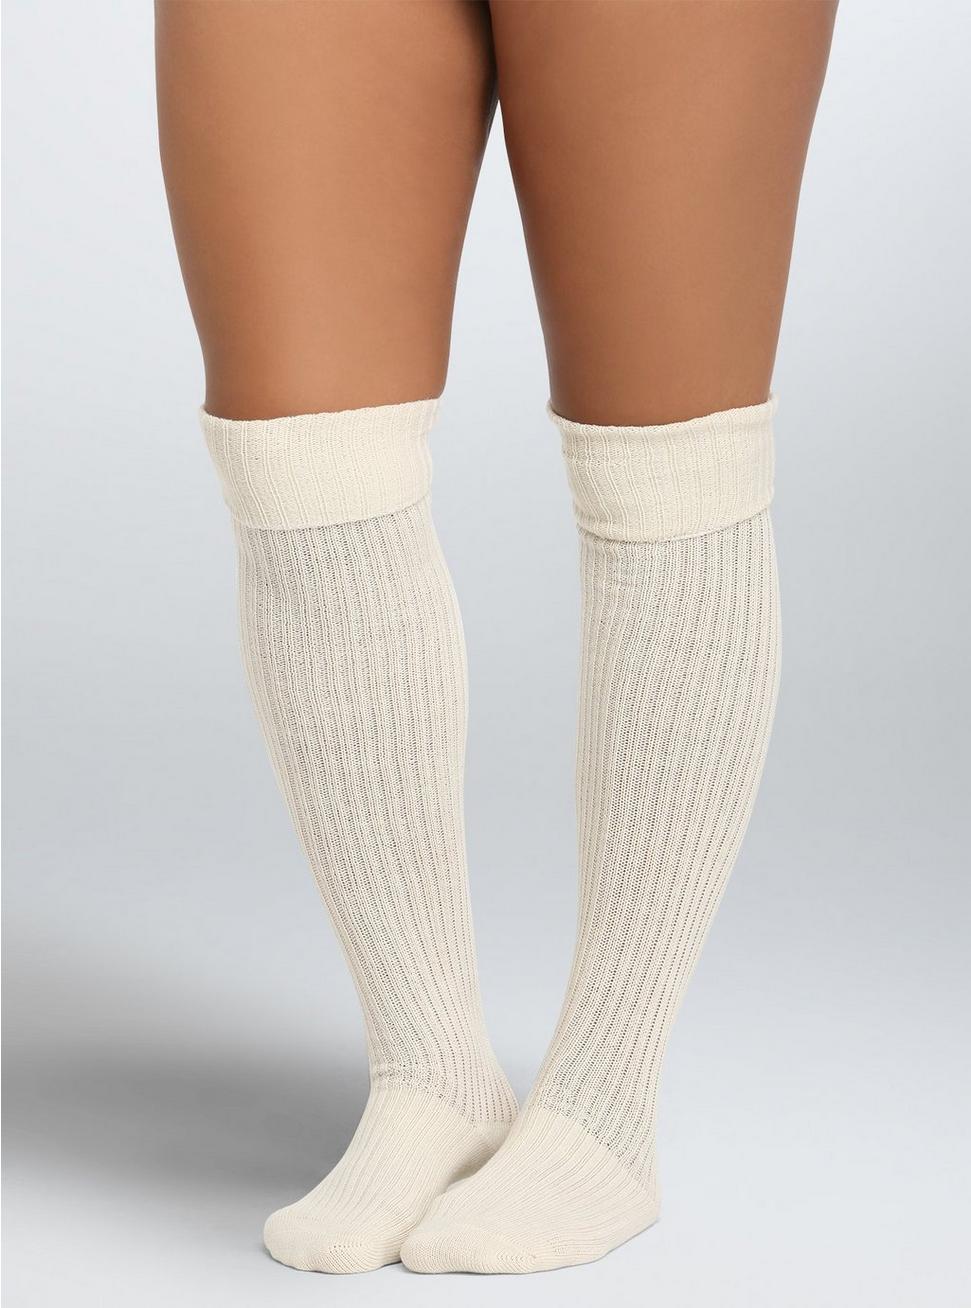 ashley bignell recommends torrid knee high socks pic